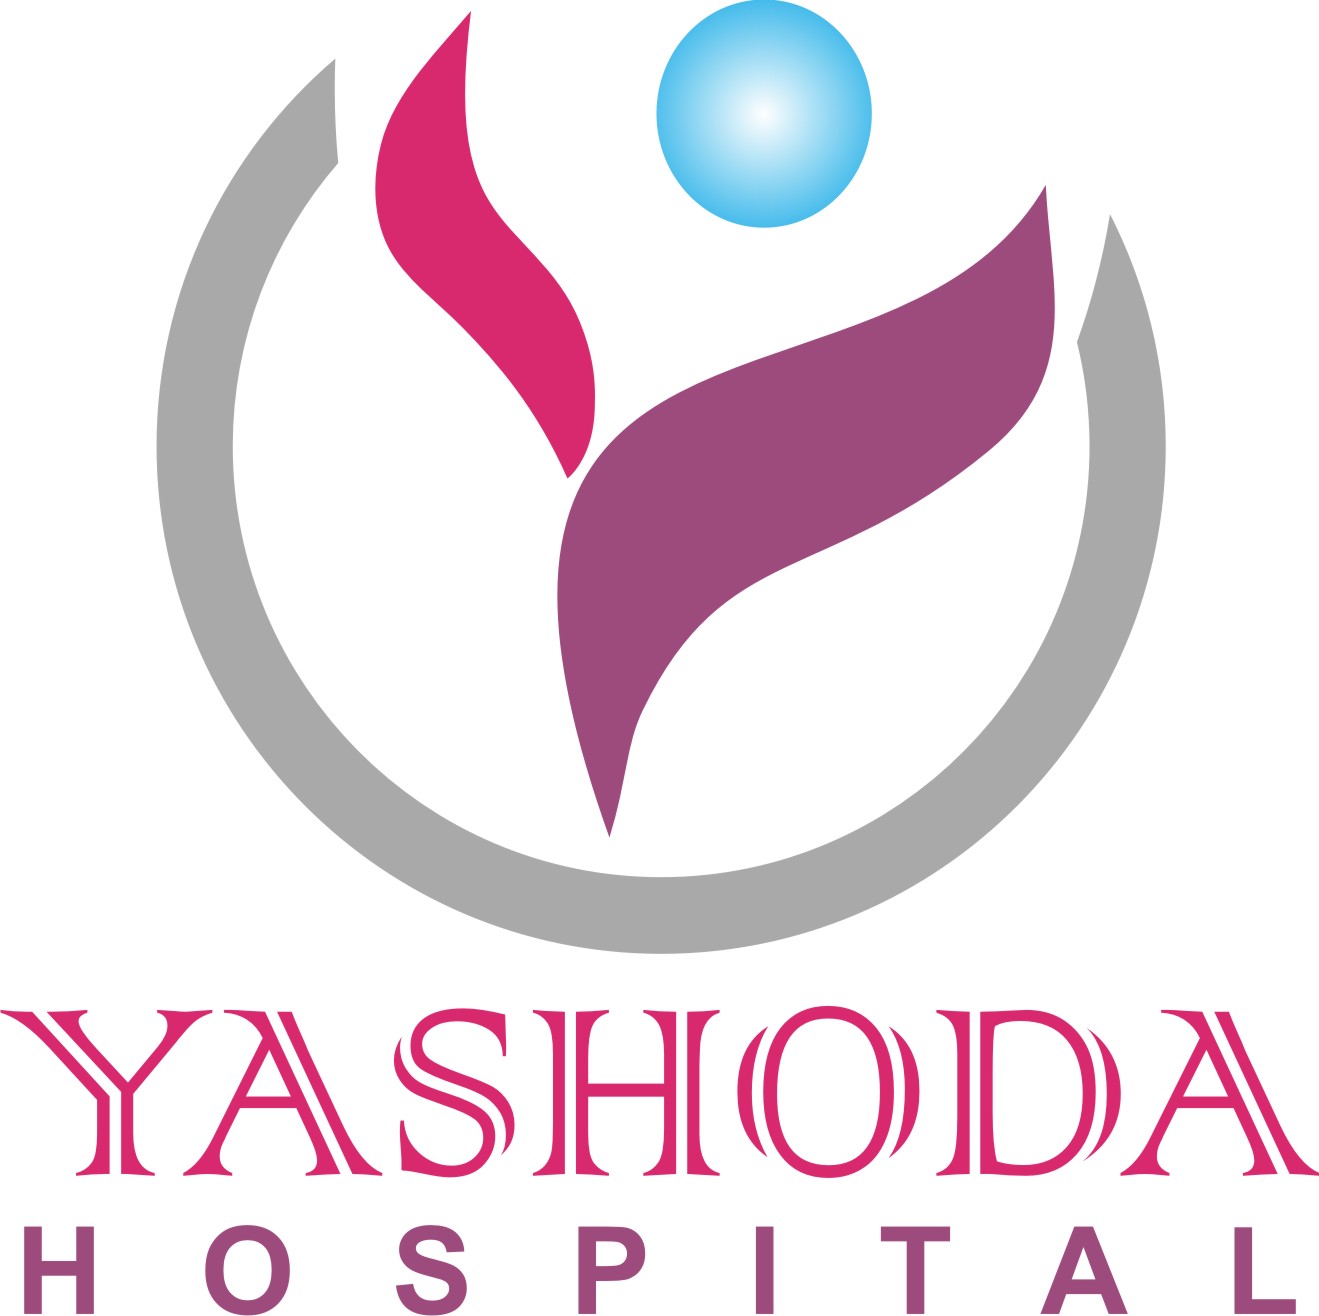 Yashoda Hospital|Hospitals|Medical Services